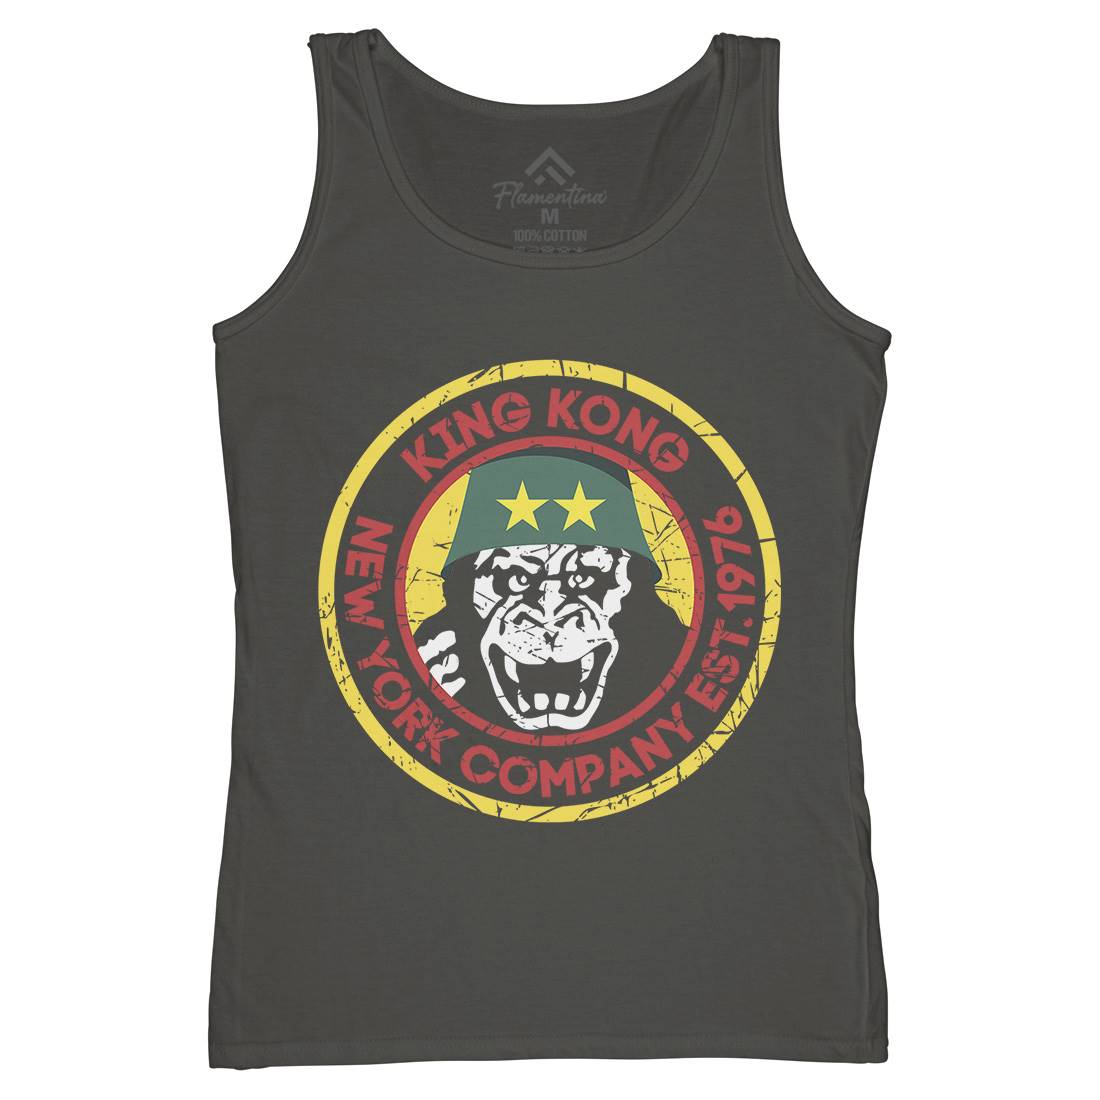 King Kong Company Womens Organic Tank Top Vest Retro D362